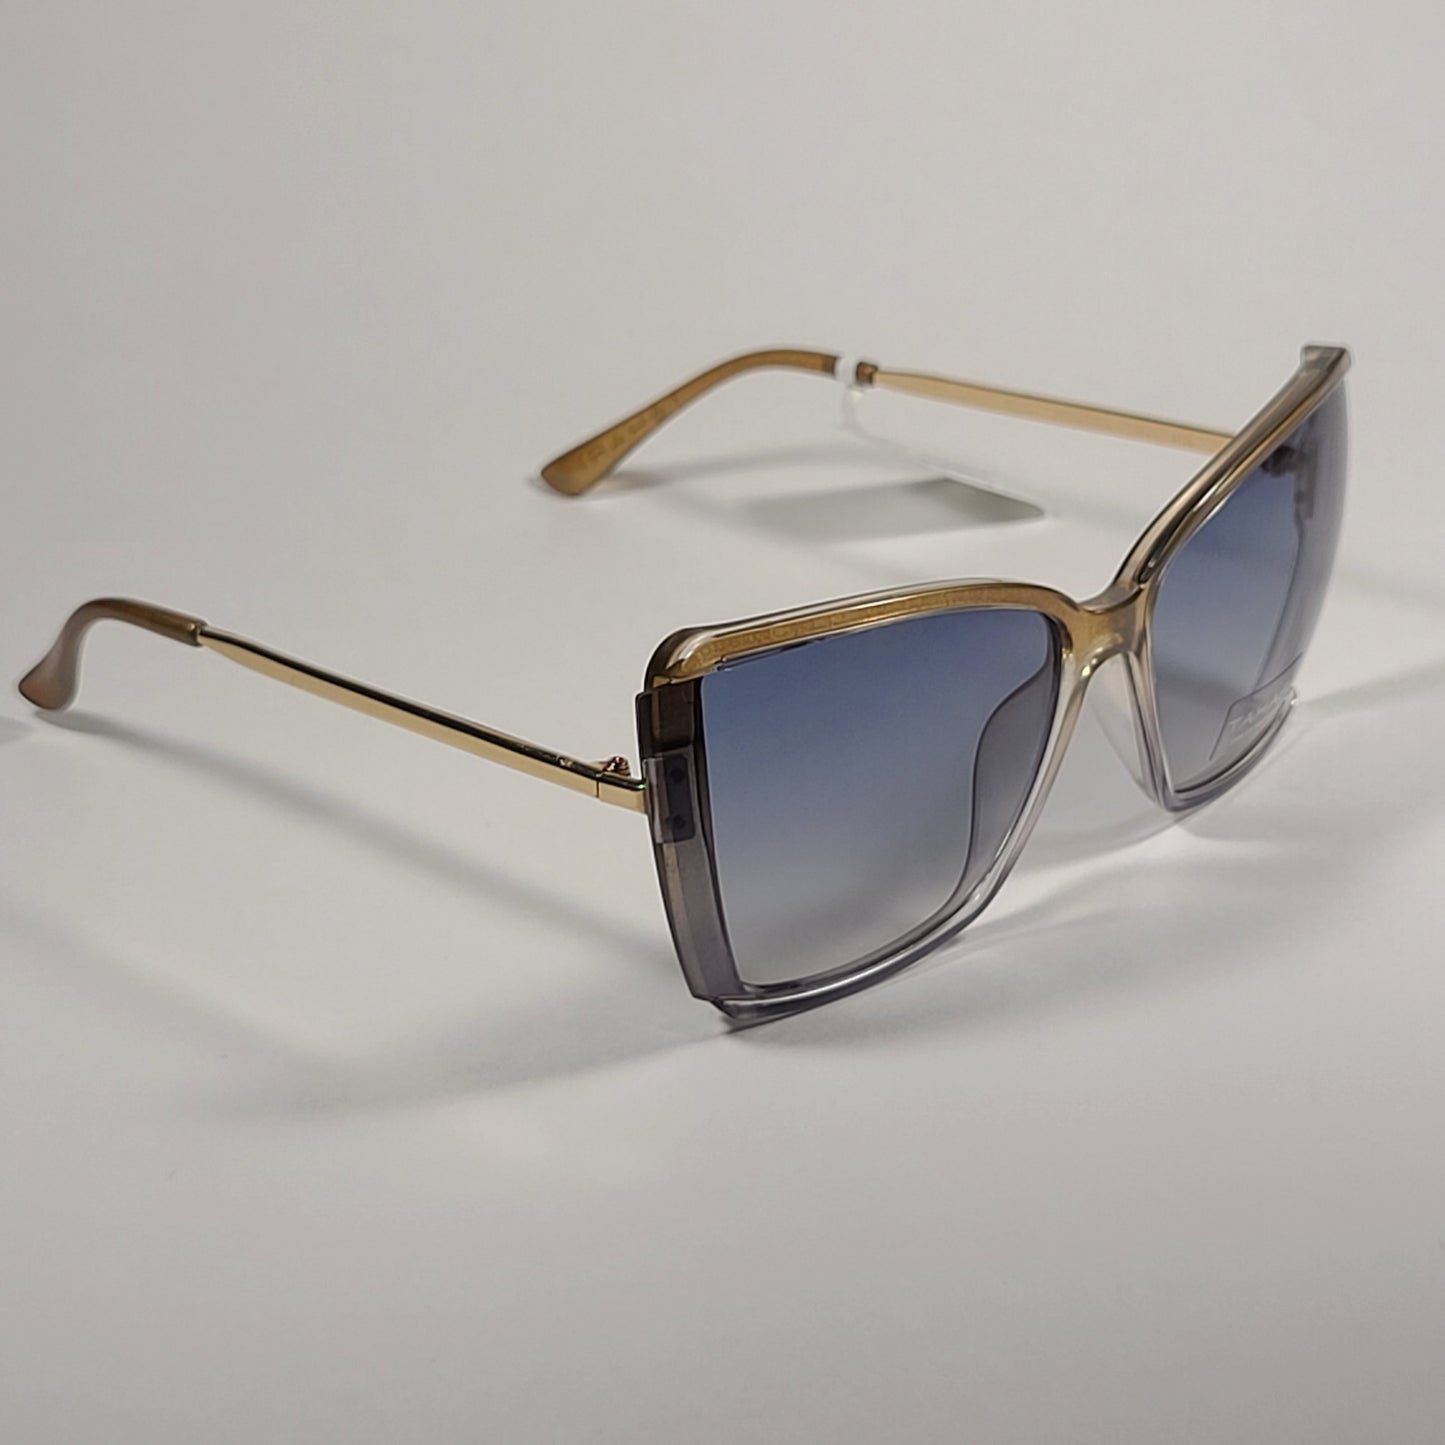 Tahari Shield Butterfly Sunglasses Gold Blue Frame Blue Gradient Lens TH881 BTBL - Sunglasses